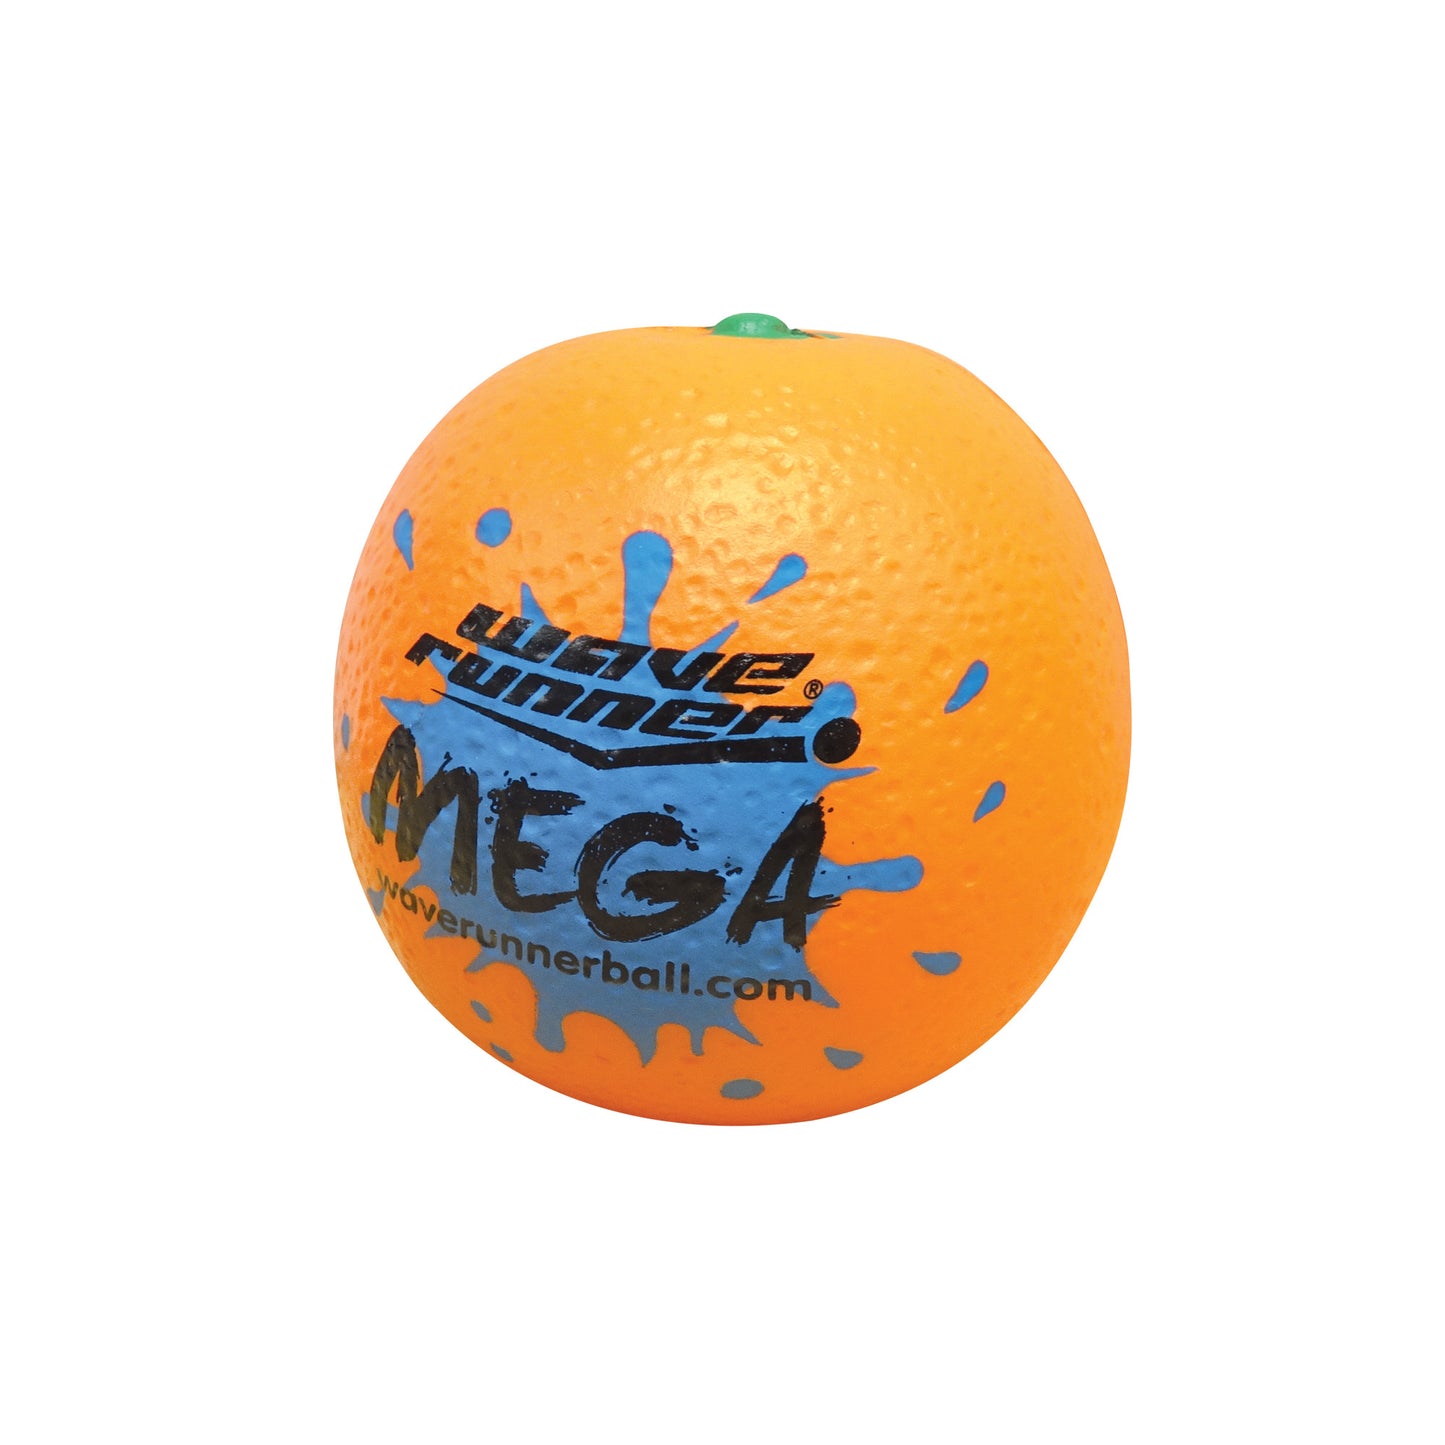 Orange Mega Ball